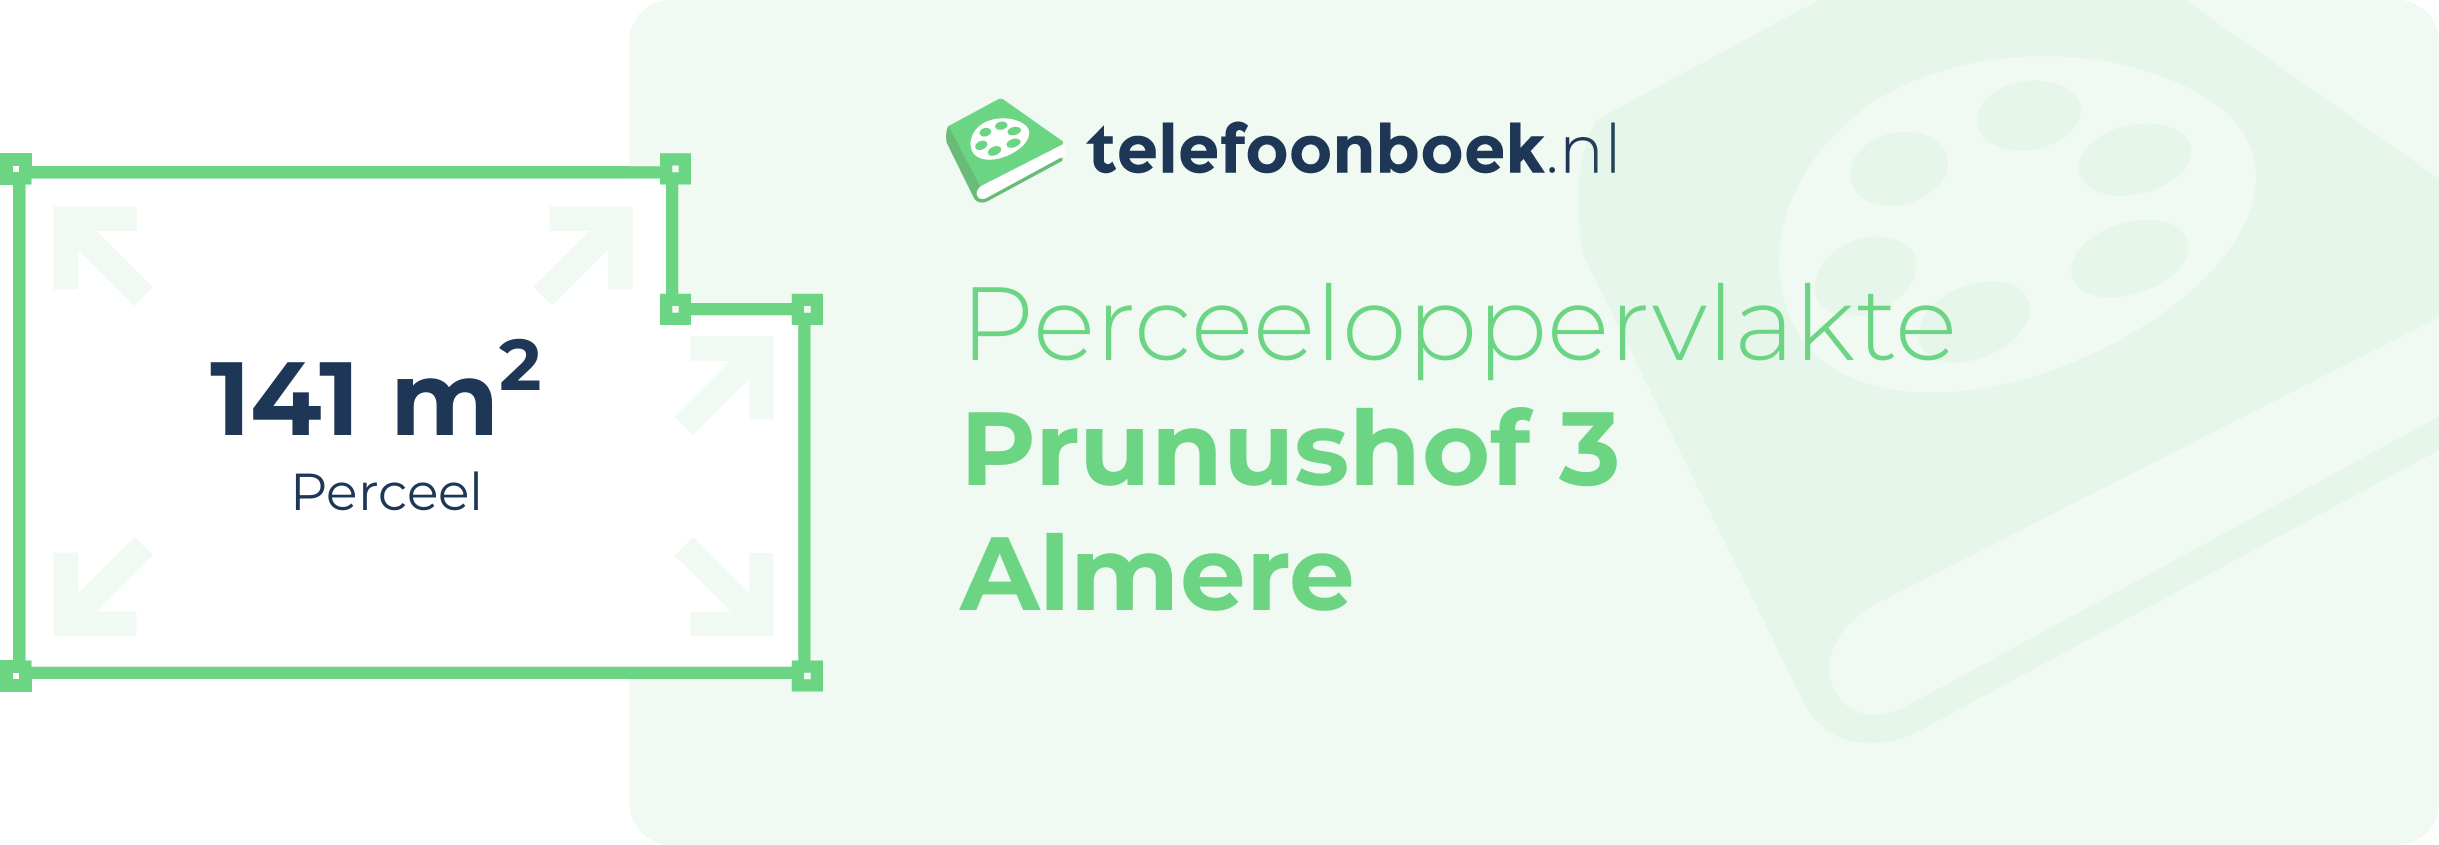 Perceeloppervlakte Prunushof 3 Almere